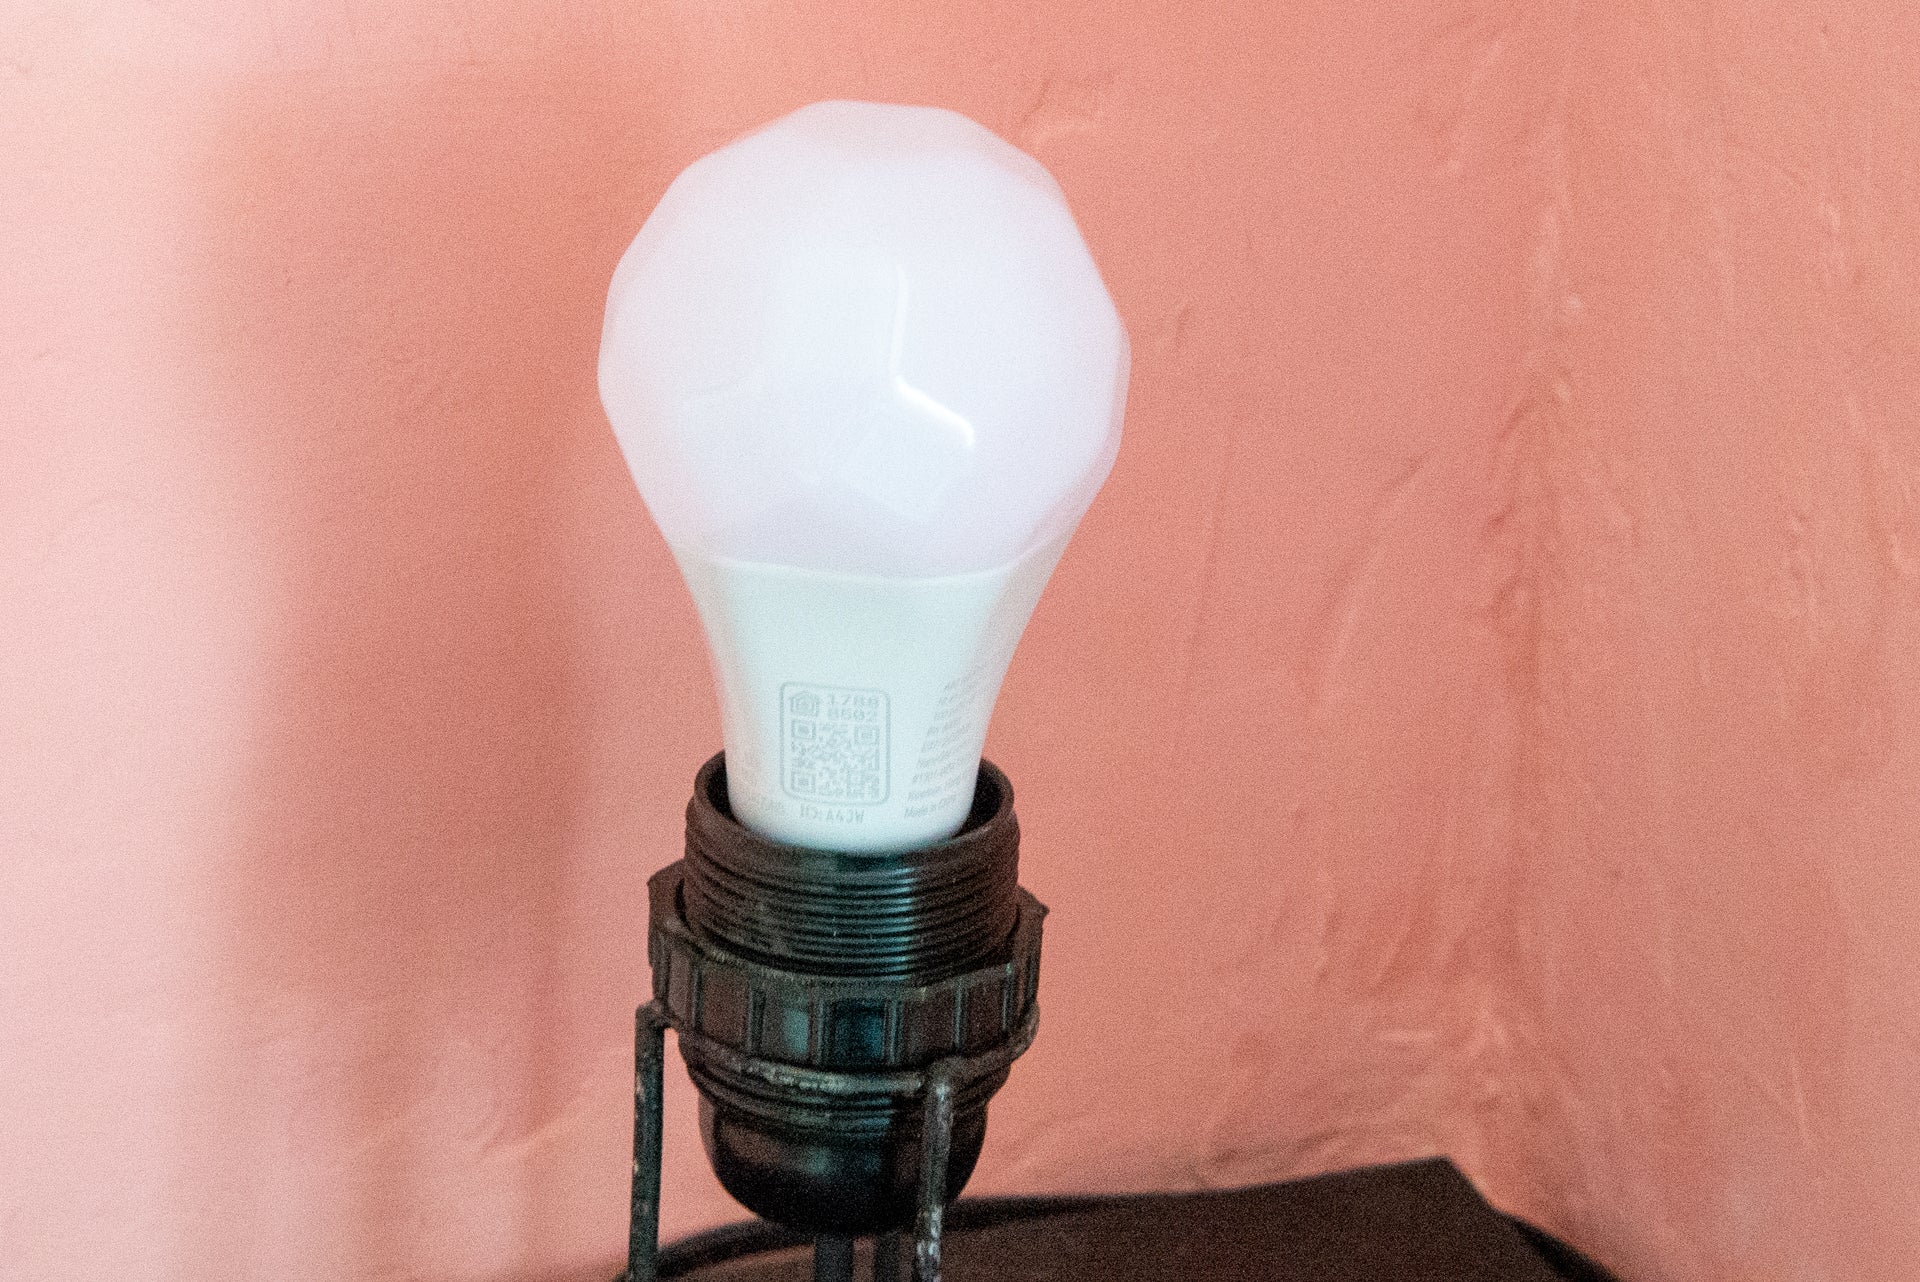 A Nanoleaf colored bulb fixed in a holder kept in a corner